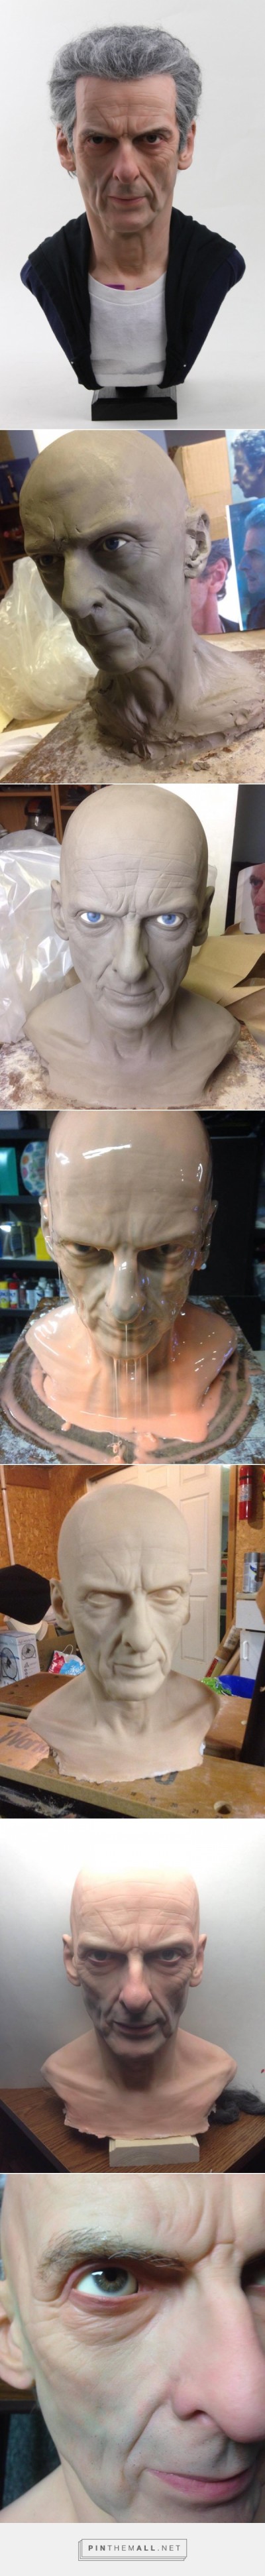 Technique sculpture hyper realiste – 12th Doctor (Peter Capaldi) Life-Sized Sculpture by mrstevenrichter –  http://imgur.com/gallery/31NDo